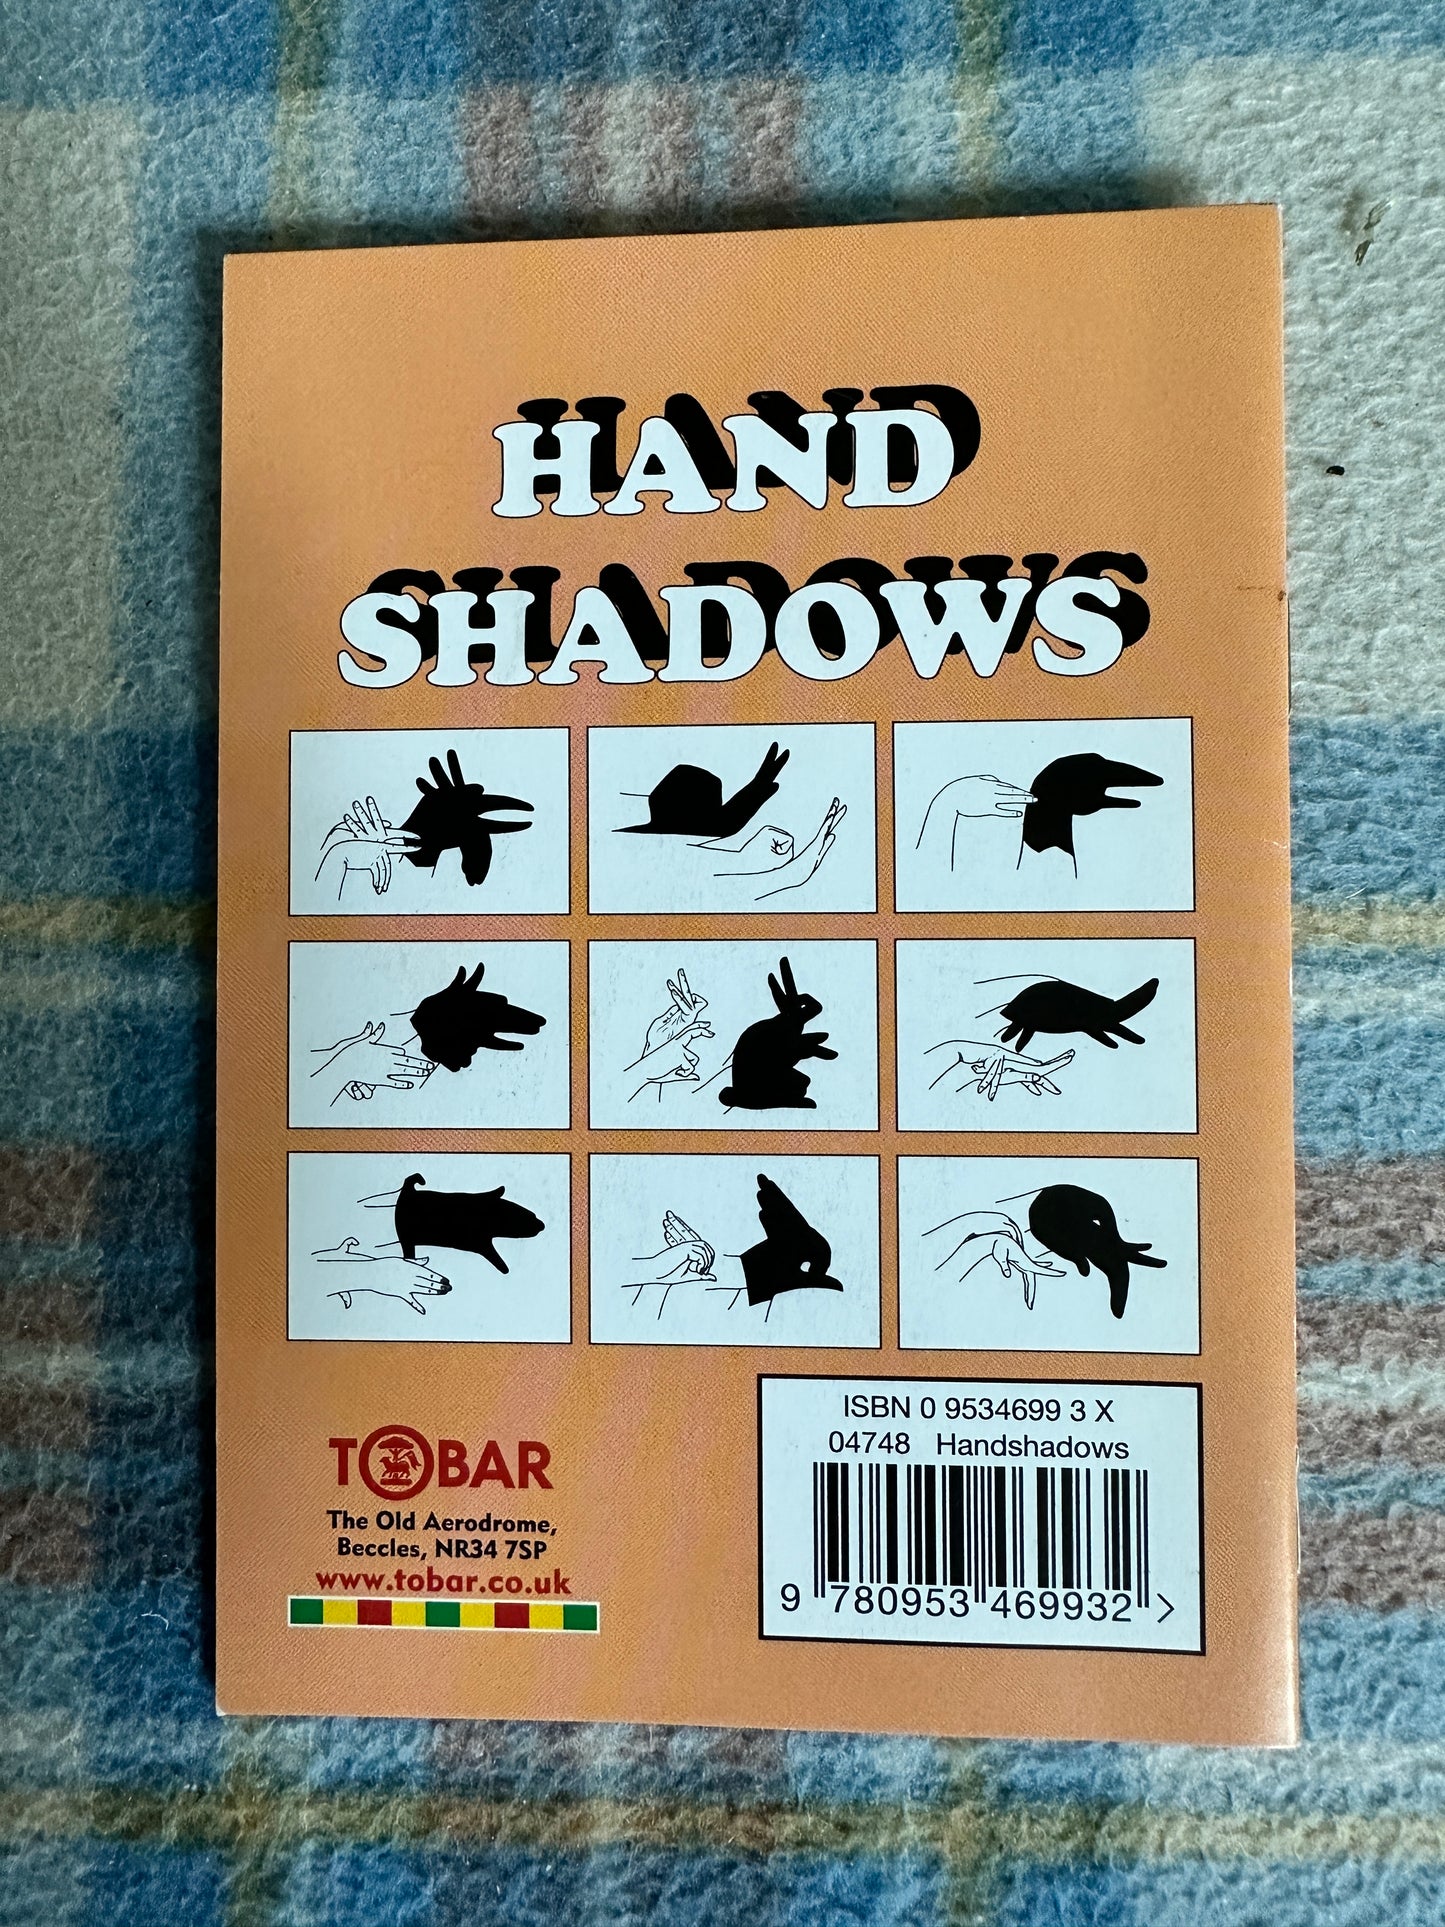 1997 Hand Shadows(Tobar Ltd publisher